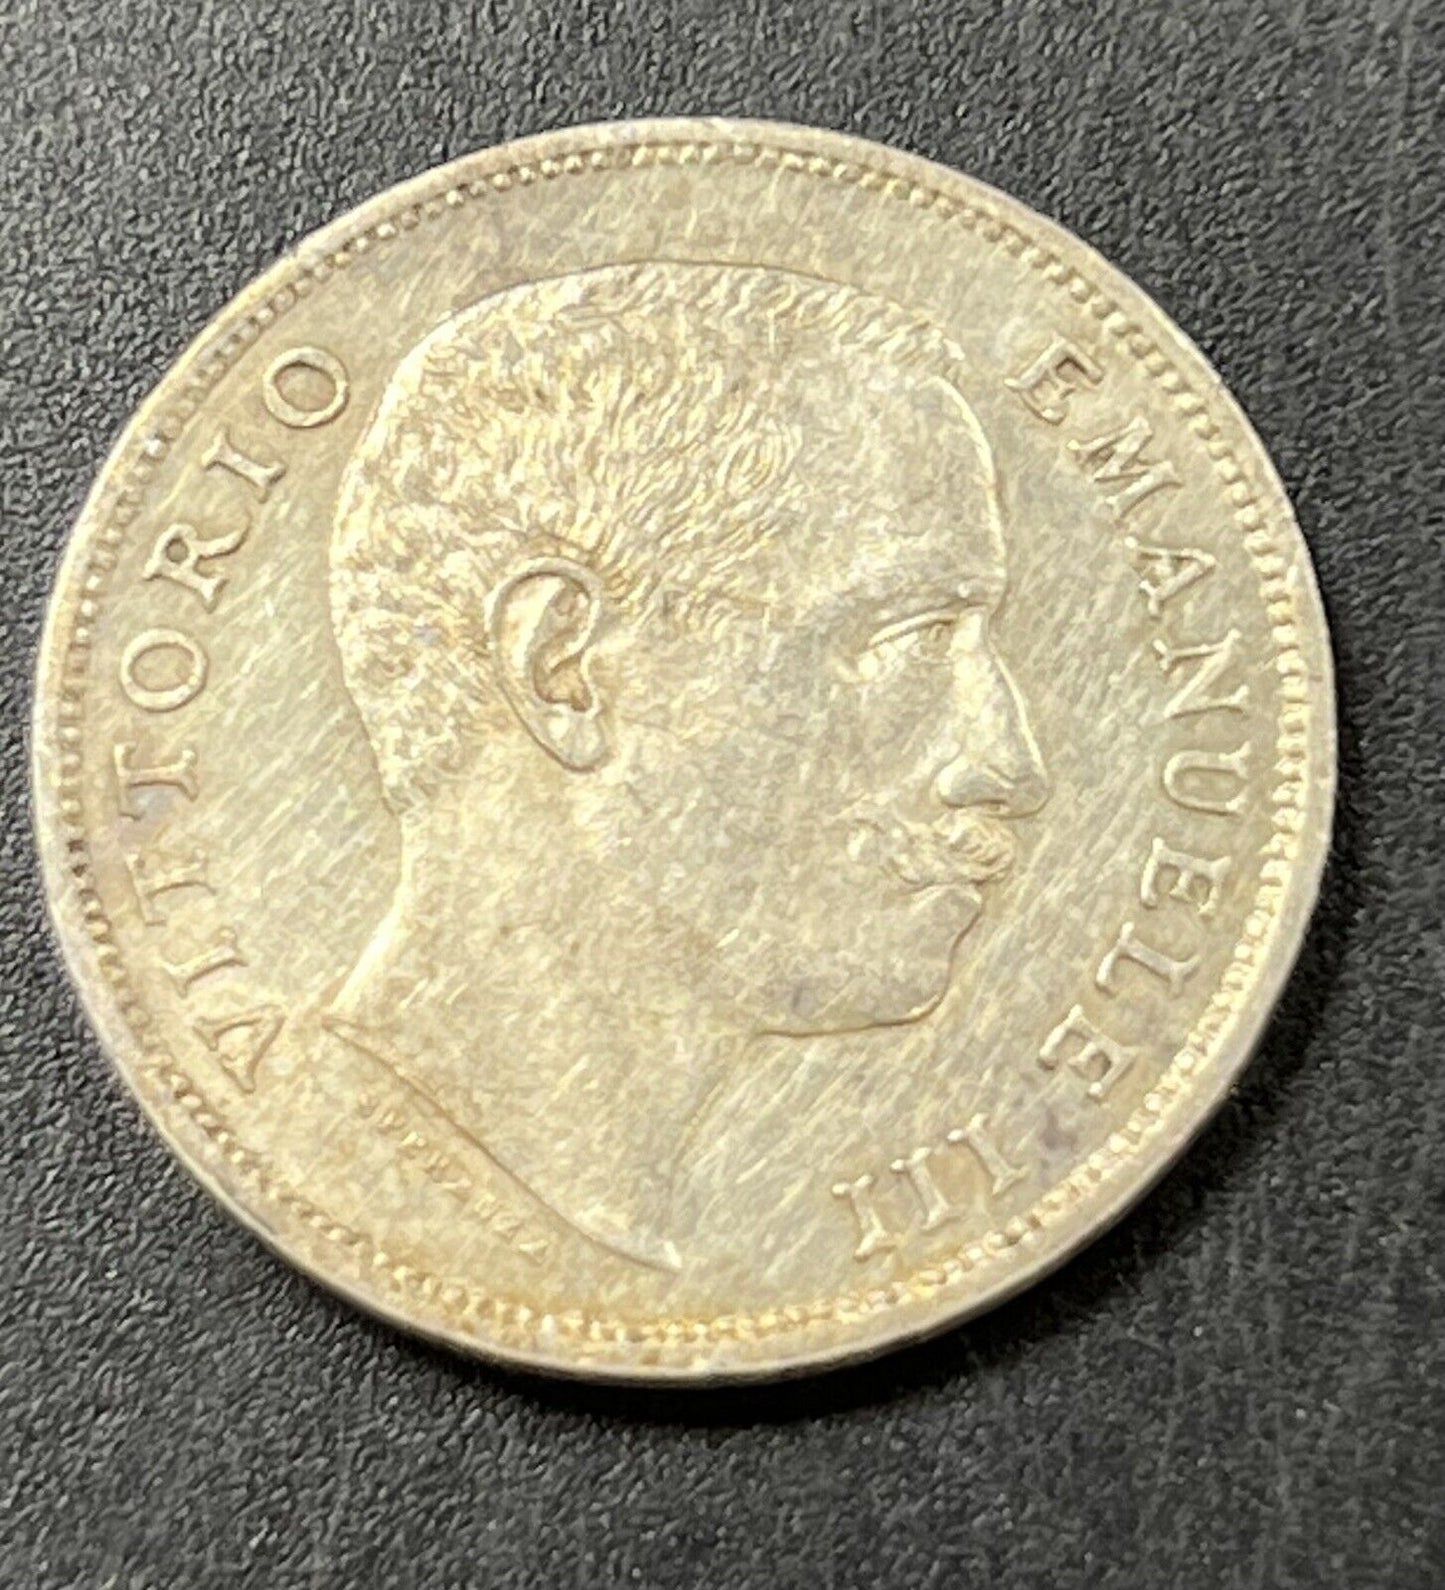 1901 Italy 1 Lire Fine Silver Coin Choice XF EF Extra Fine